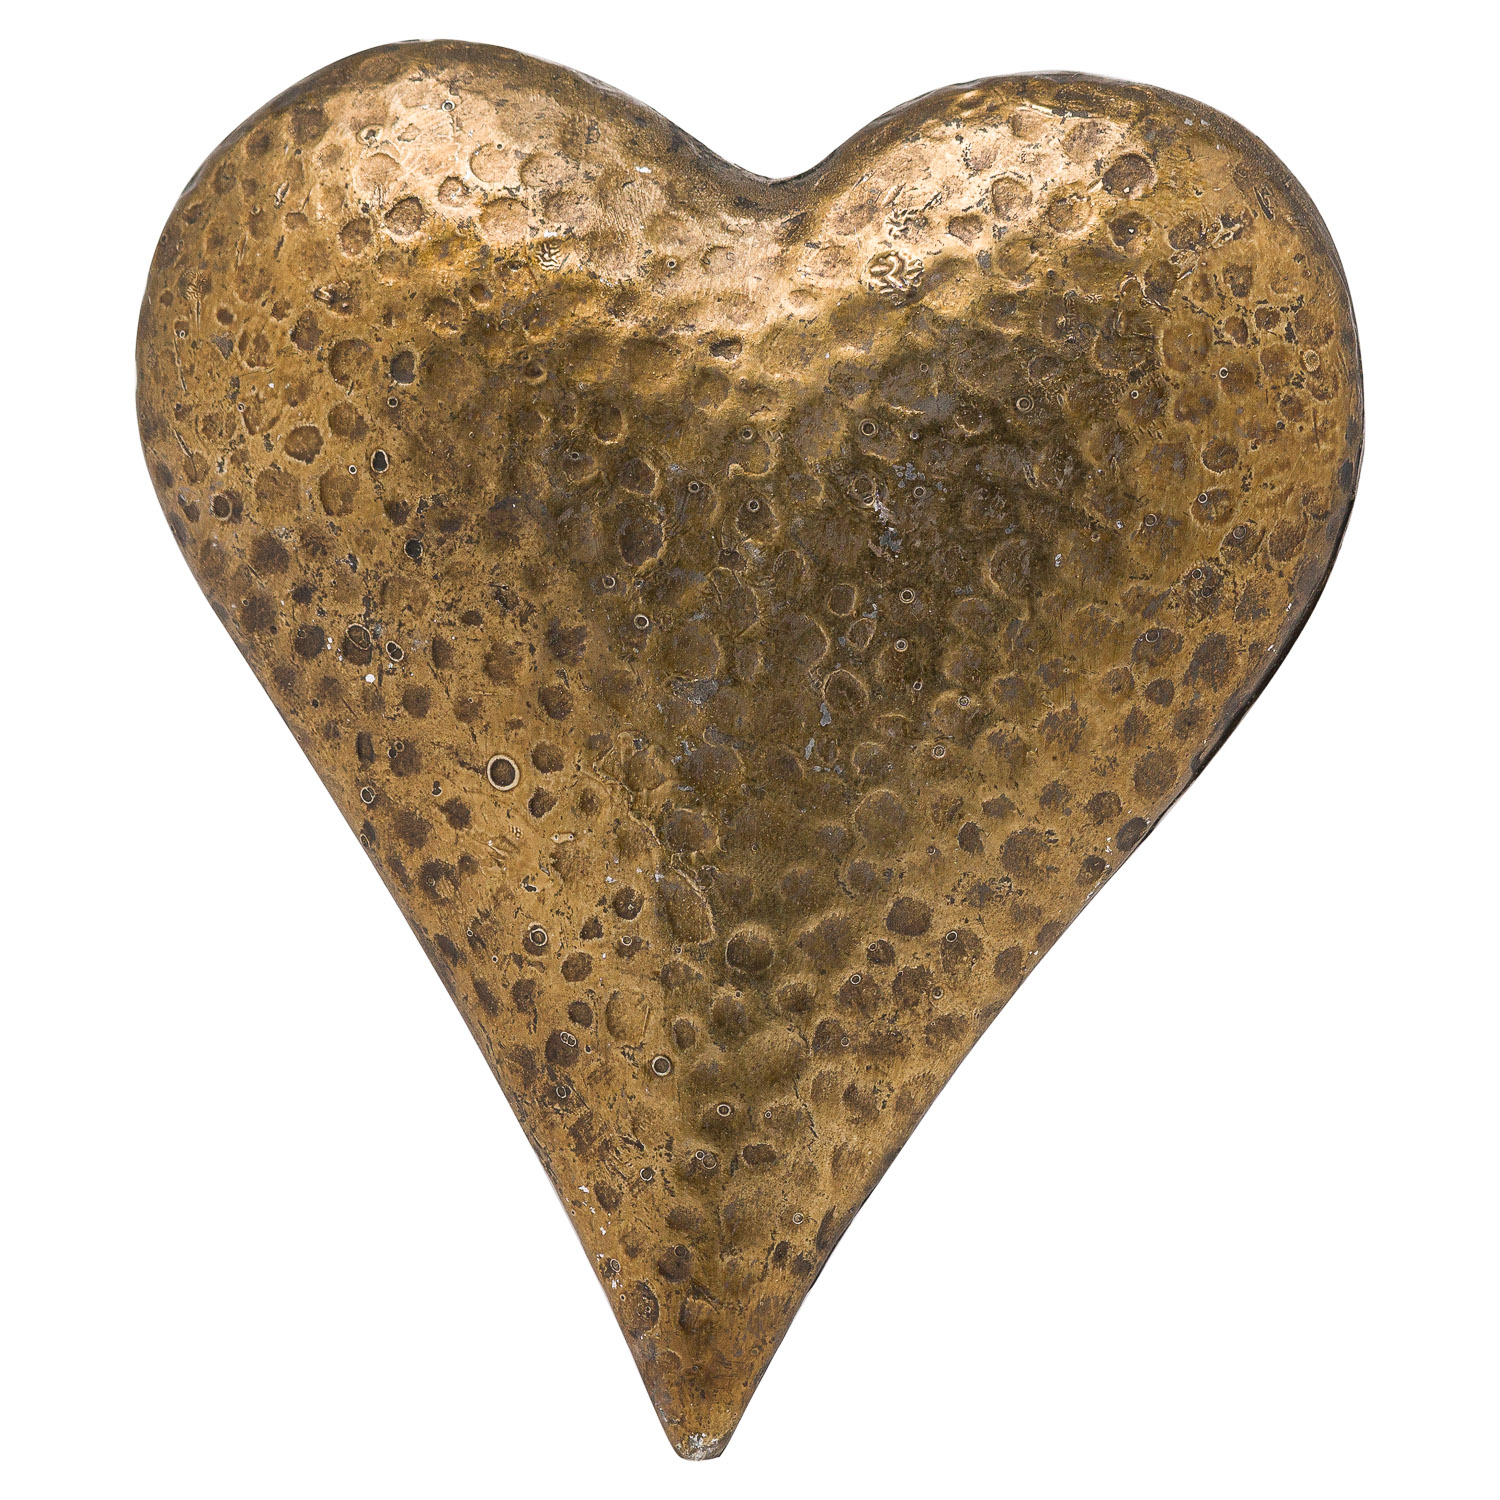 Evi Antique Bronze Heart - Image 1